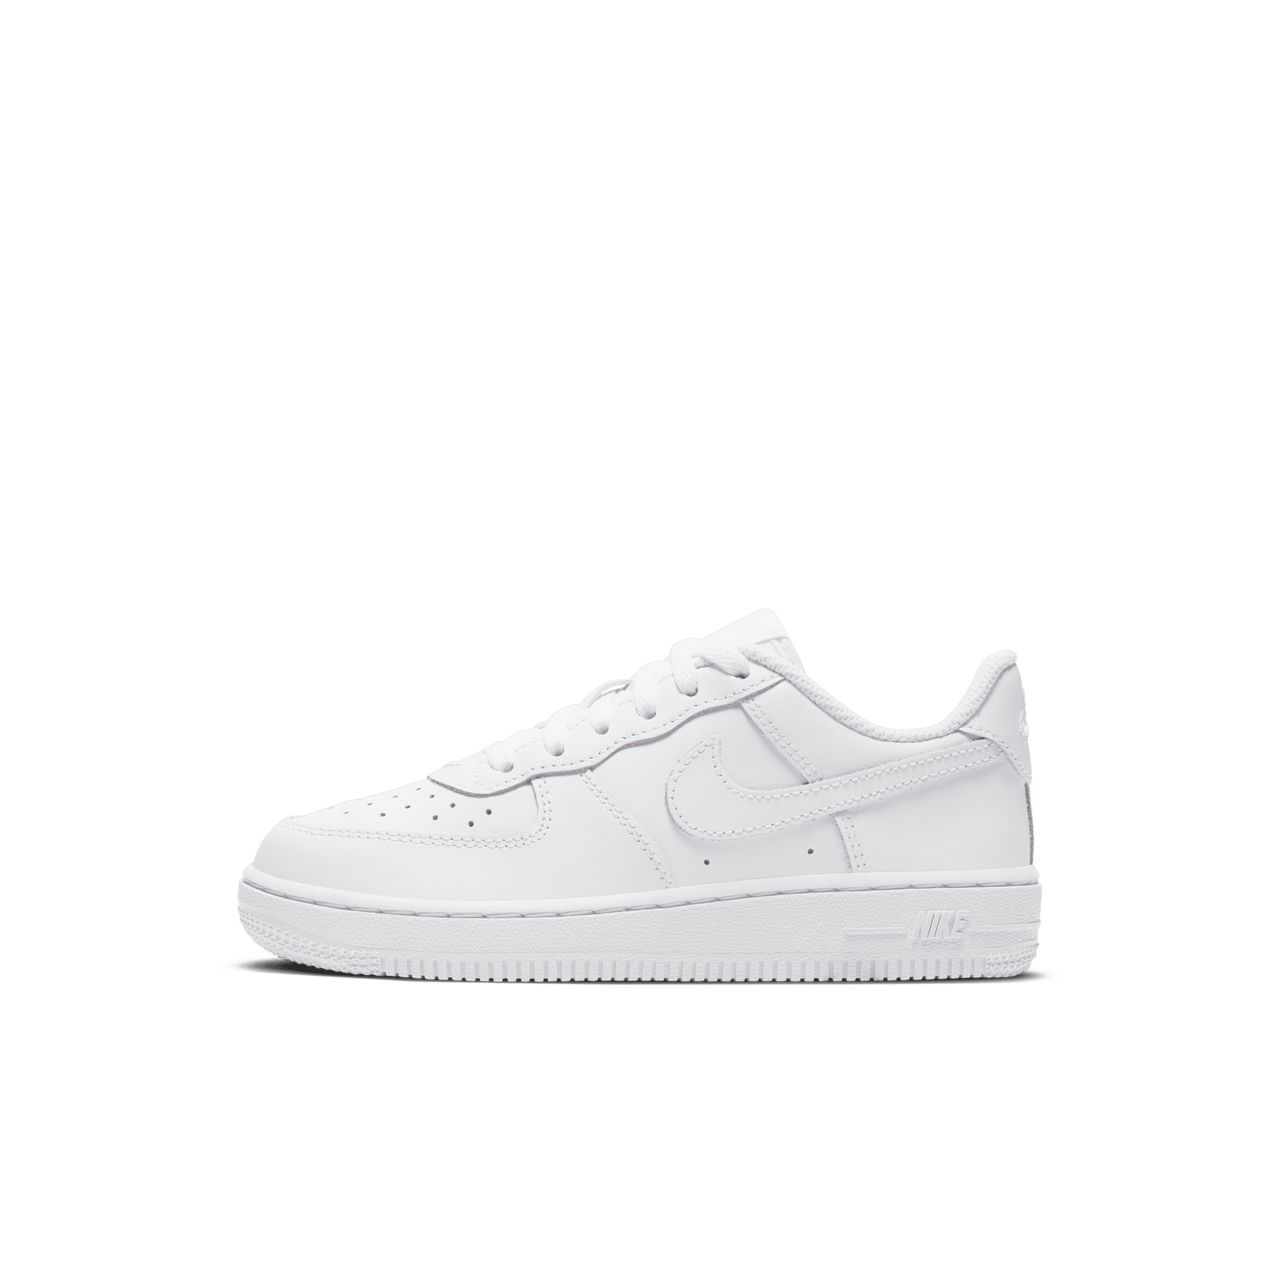 Nike Force 1 LE Schuh für jüngere Kinder - Weiß